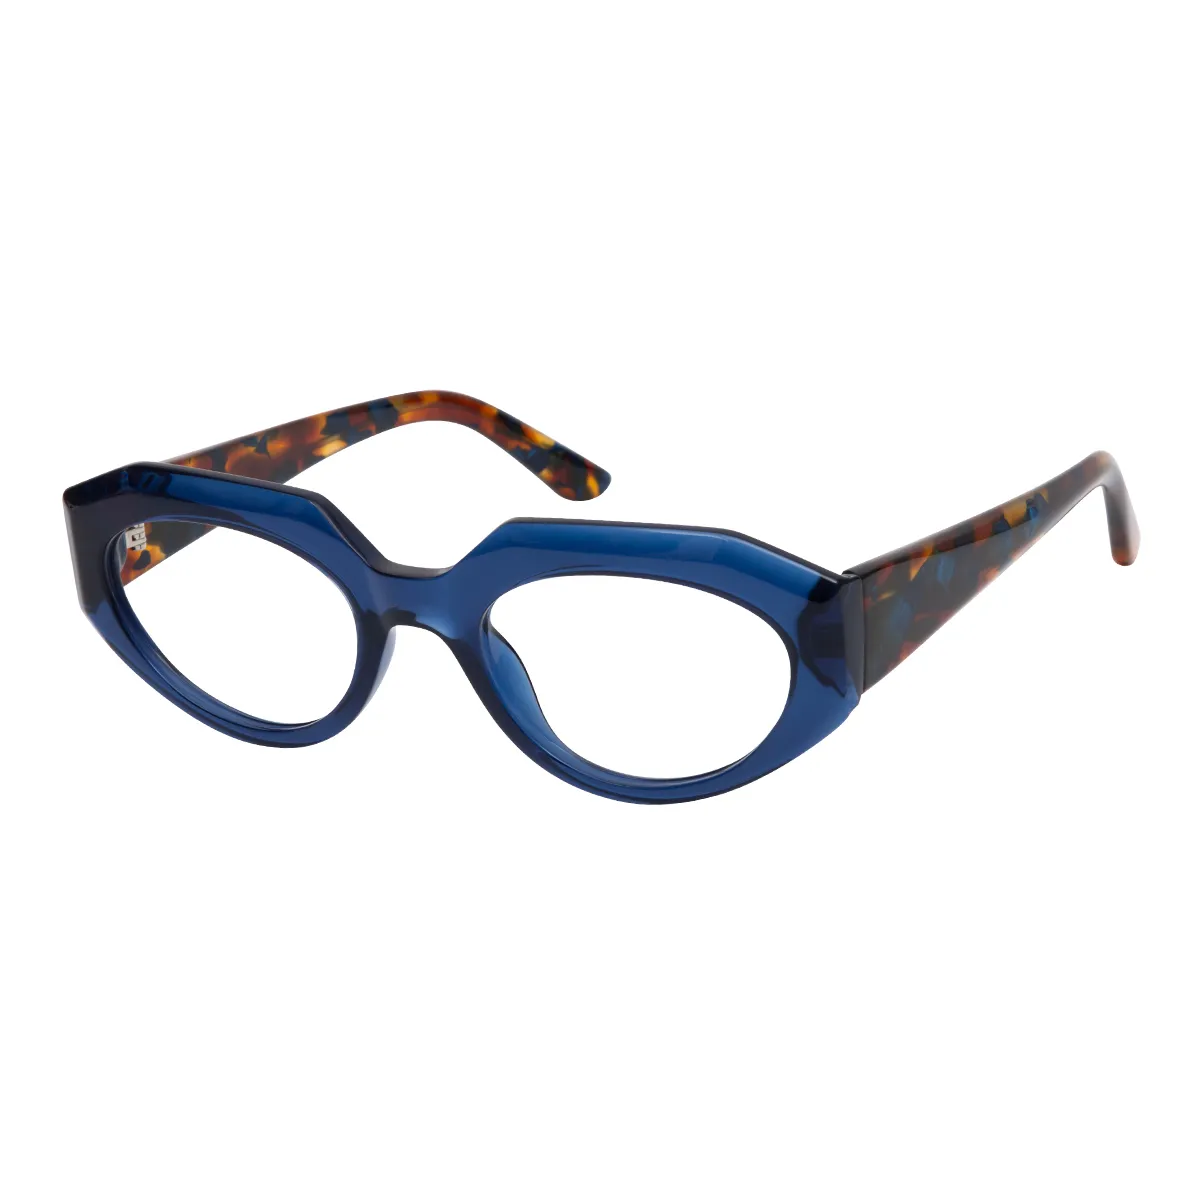 Kaida - Geometric Blue-Tortoiseshell Glasses for Women